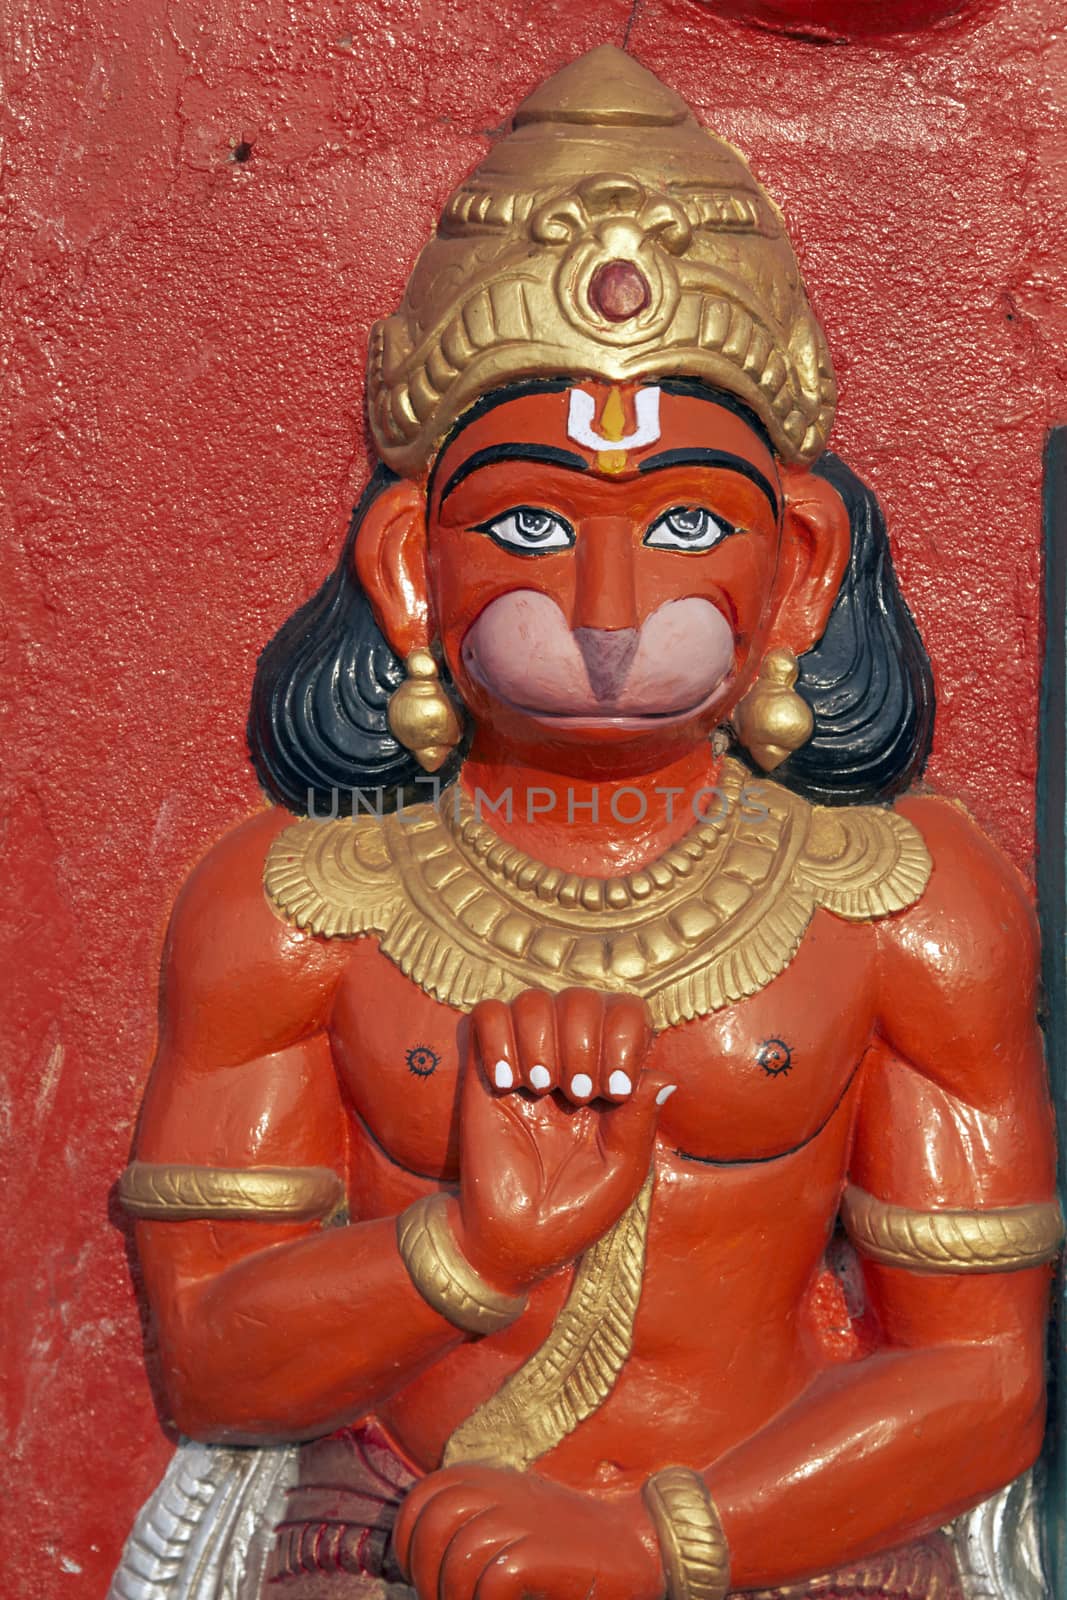 Statue of the Hindu religious figure Hanuman, the monkey god outside a temple in Bhubaneswar, Orissa, India.